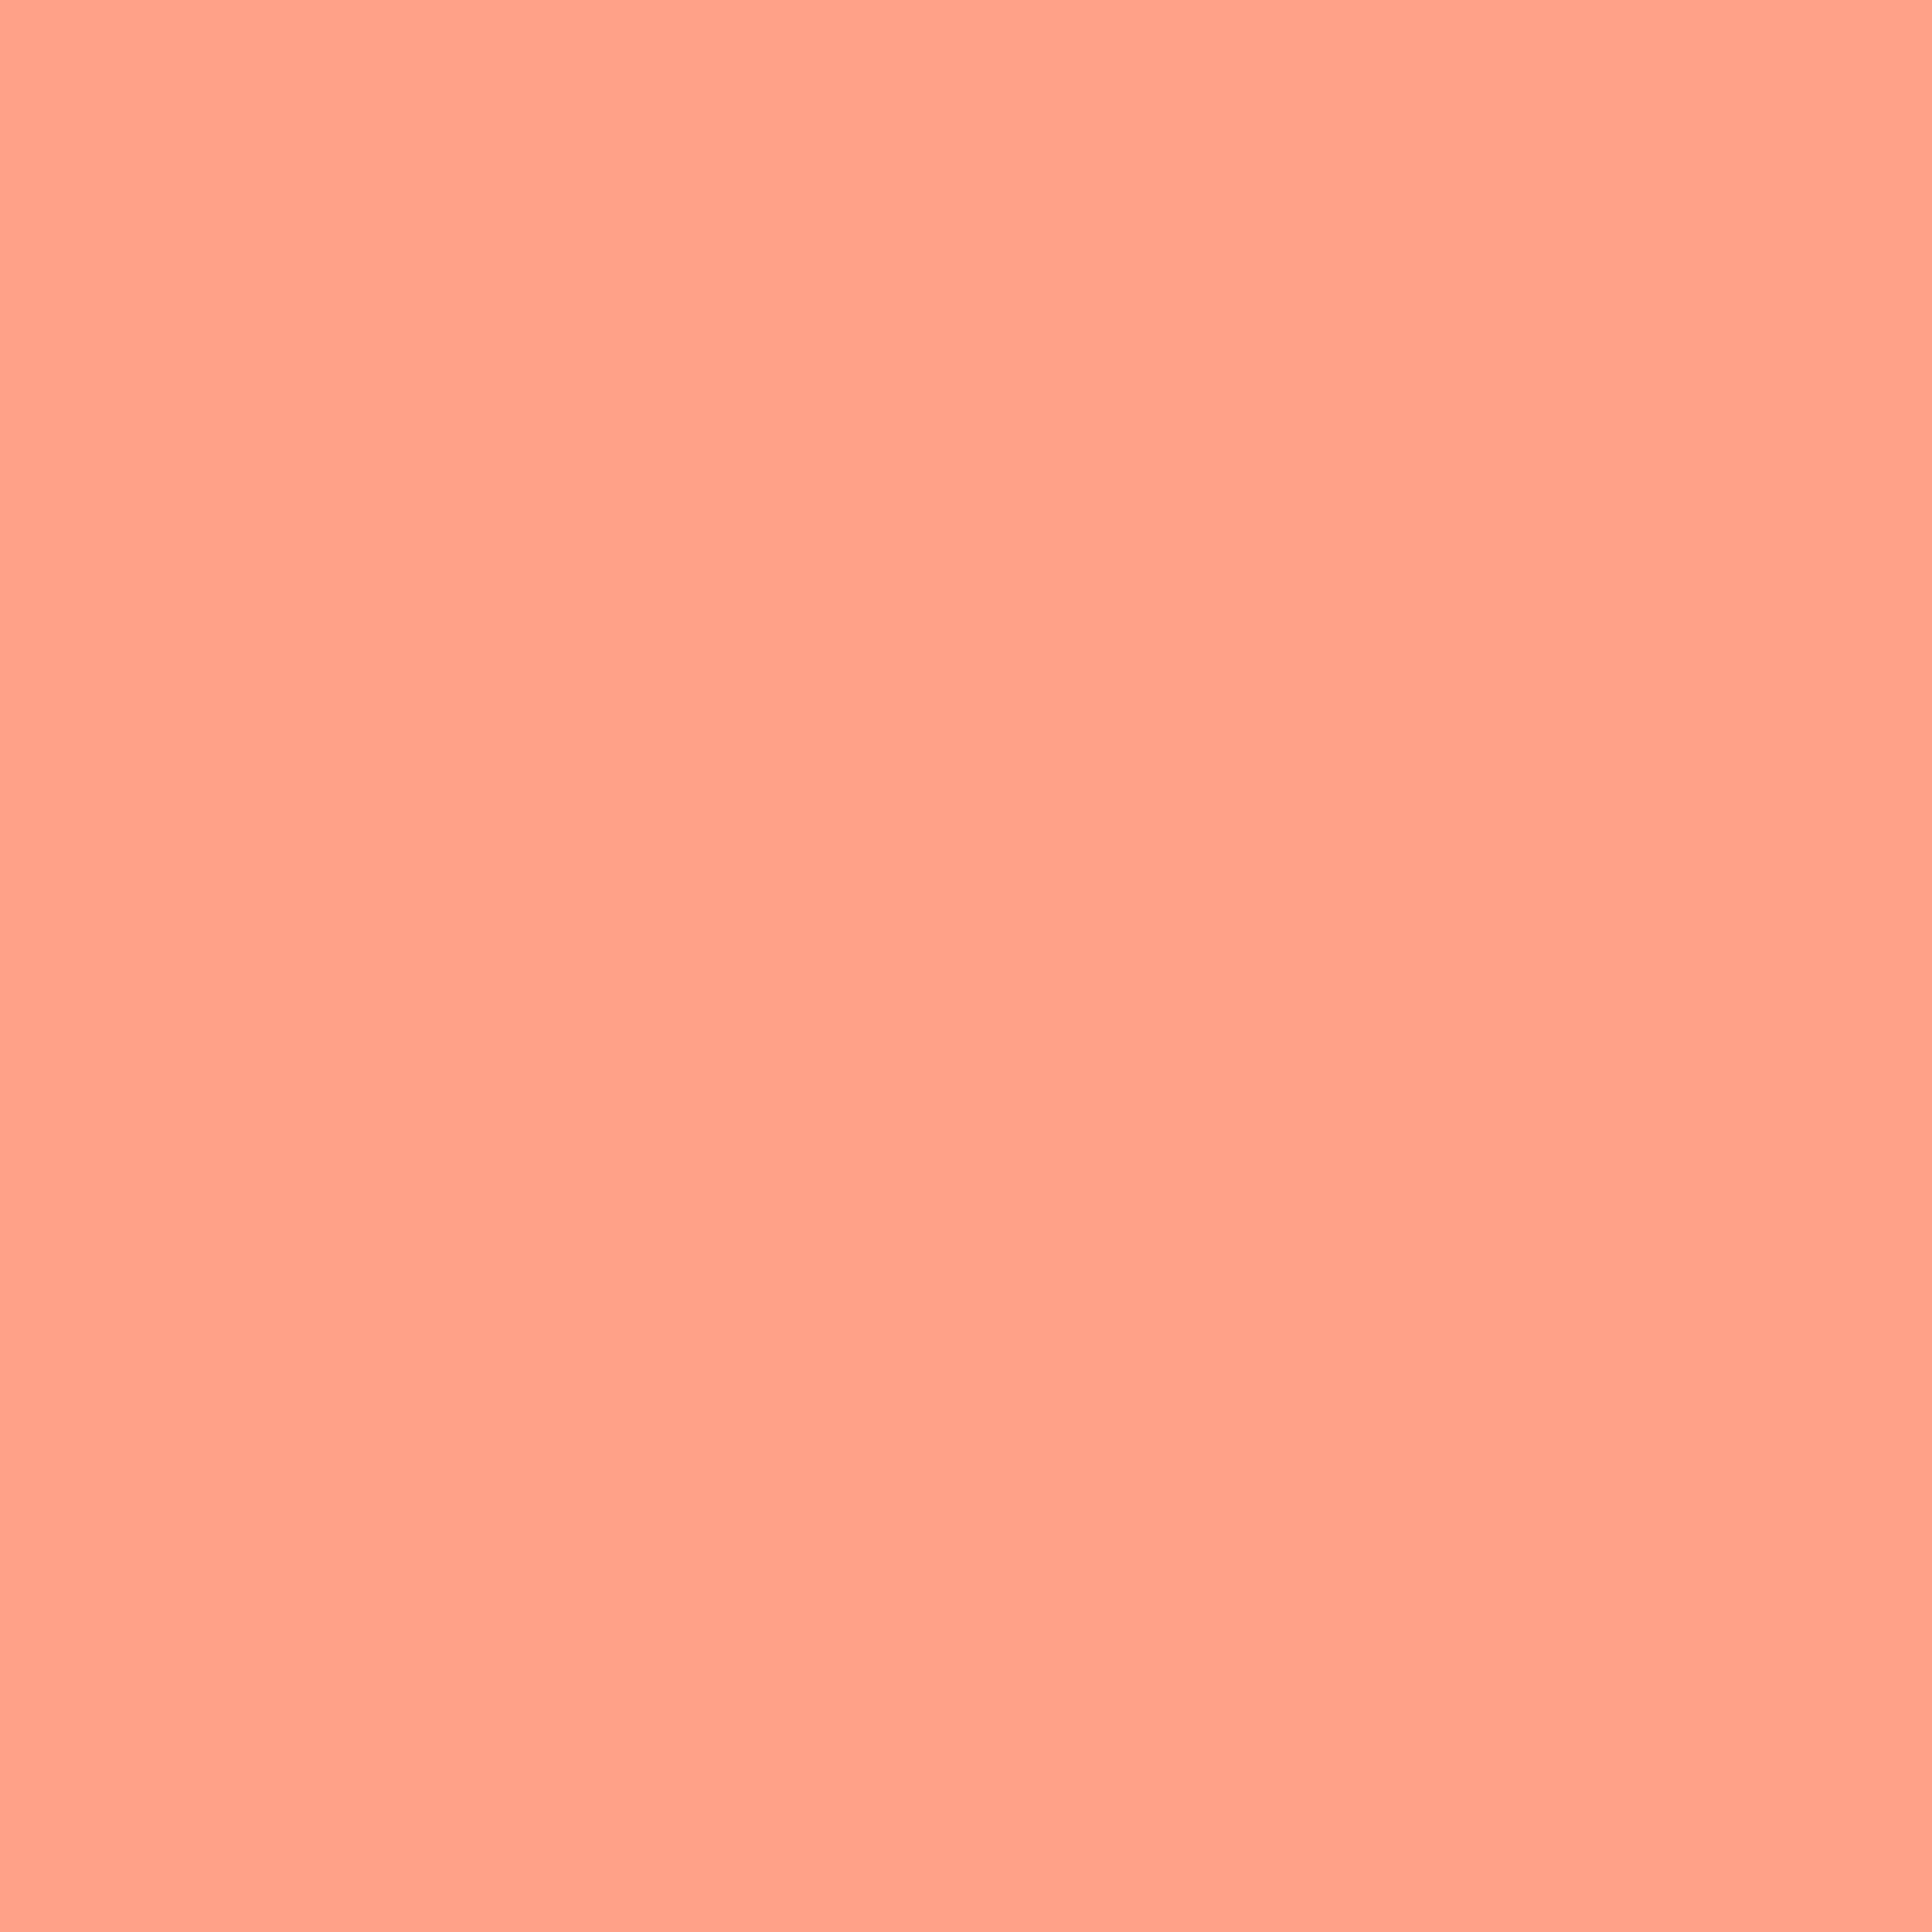 2732x2732 Vivid Tangerine Solid Color Background